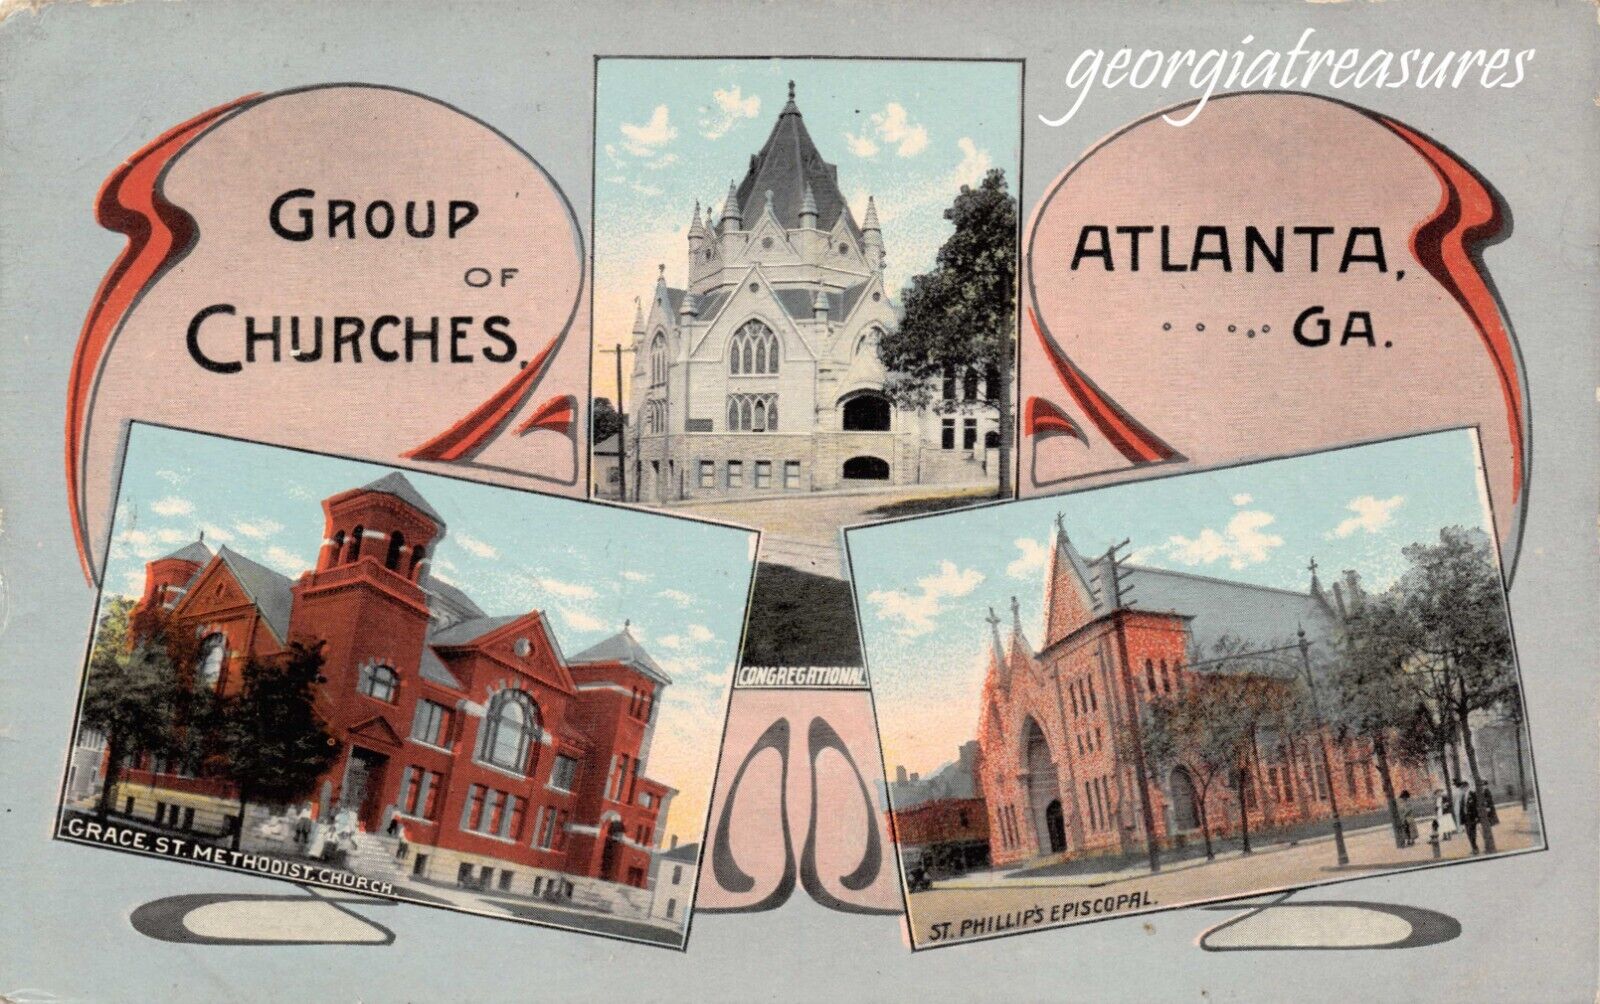 GA~GEORGIA~ATLANTA~GROUP OF CHURCHES~GRACE ST. METHODIST~ST. PHILLIPS EPISCOPAL